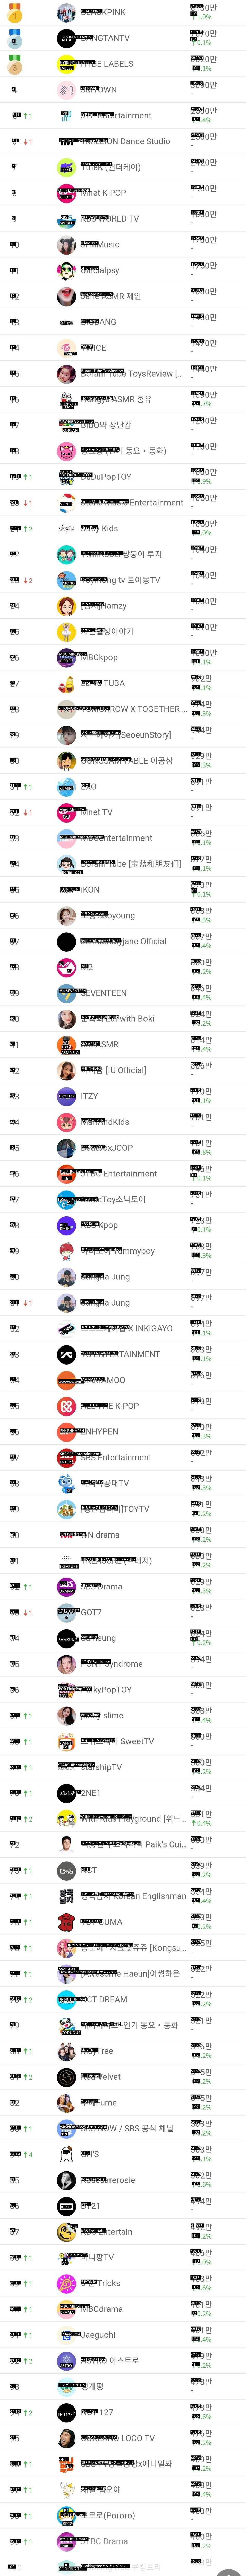 韓国YouTuber購読者順位top100